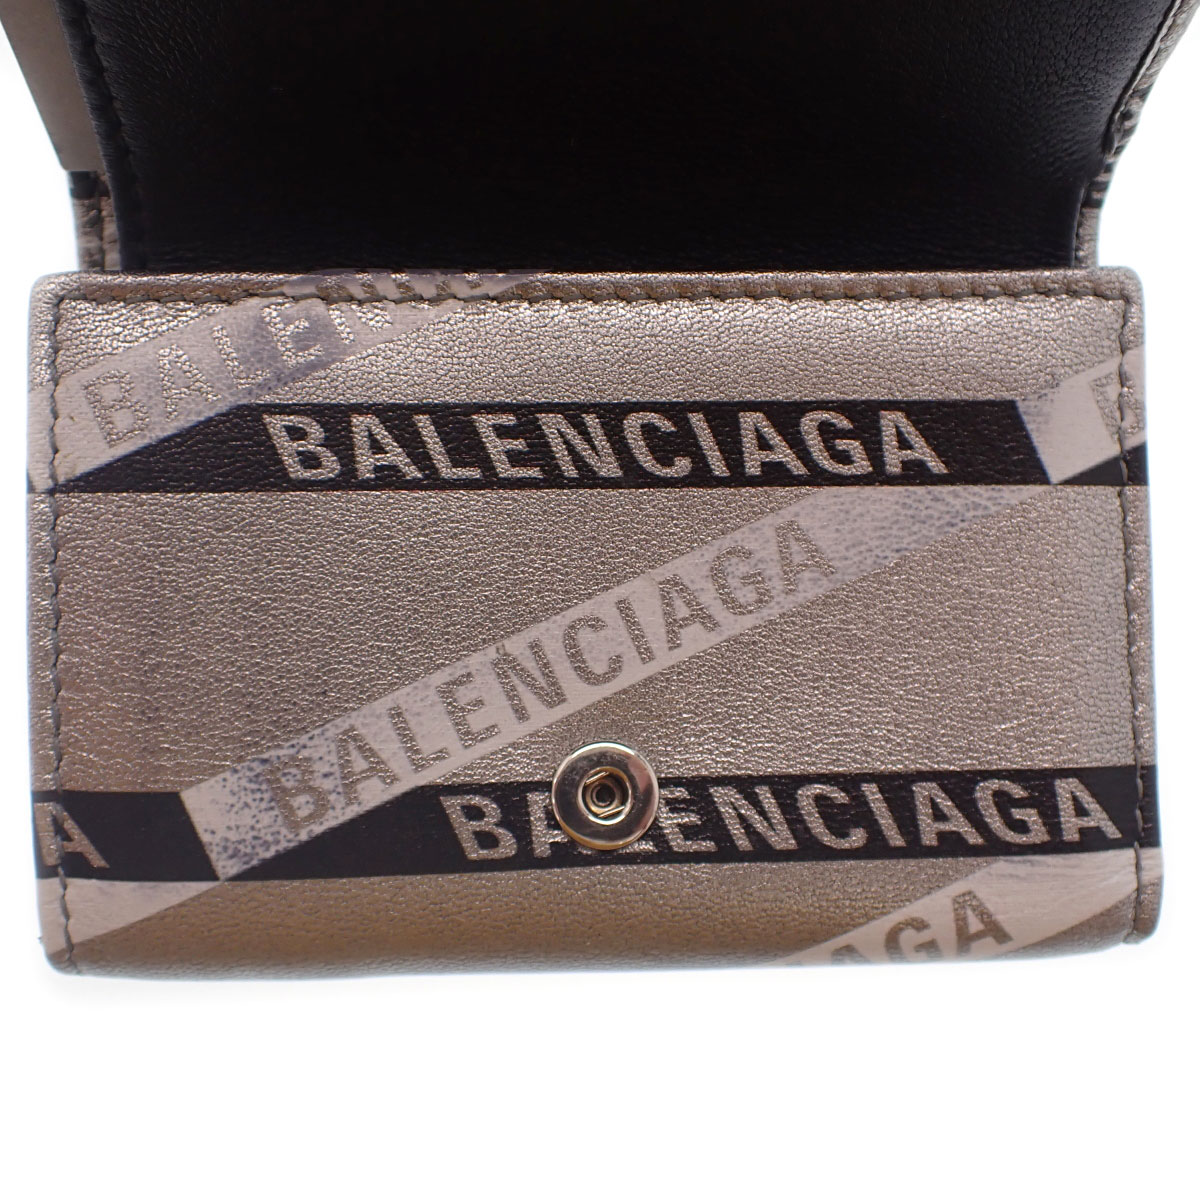 BALENCIAGA leather Compact wallet Tri-fold wallet Silver leather | eBay